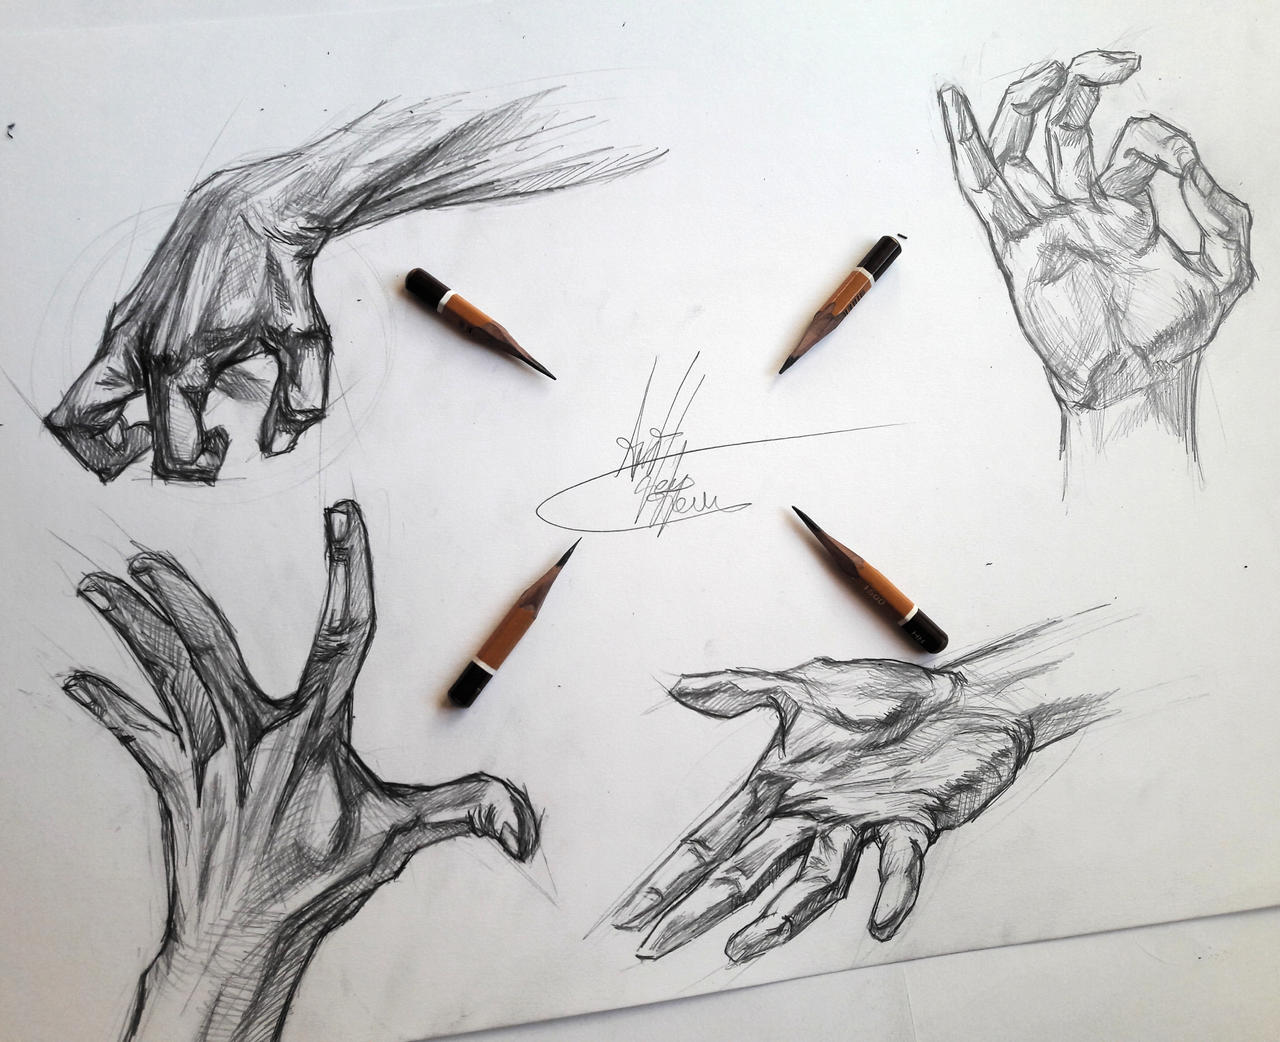 Wrist sketch by artdeepdown on DeviantArt